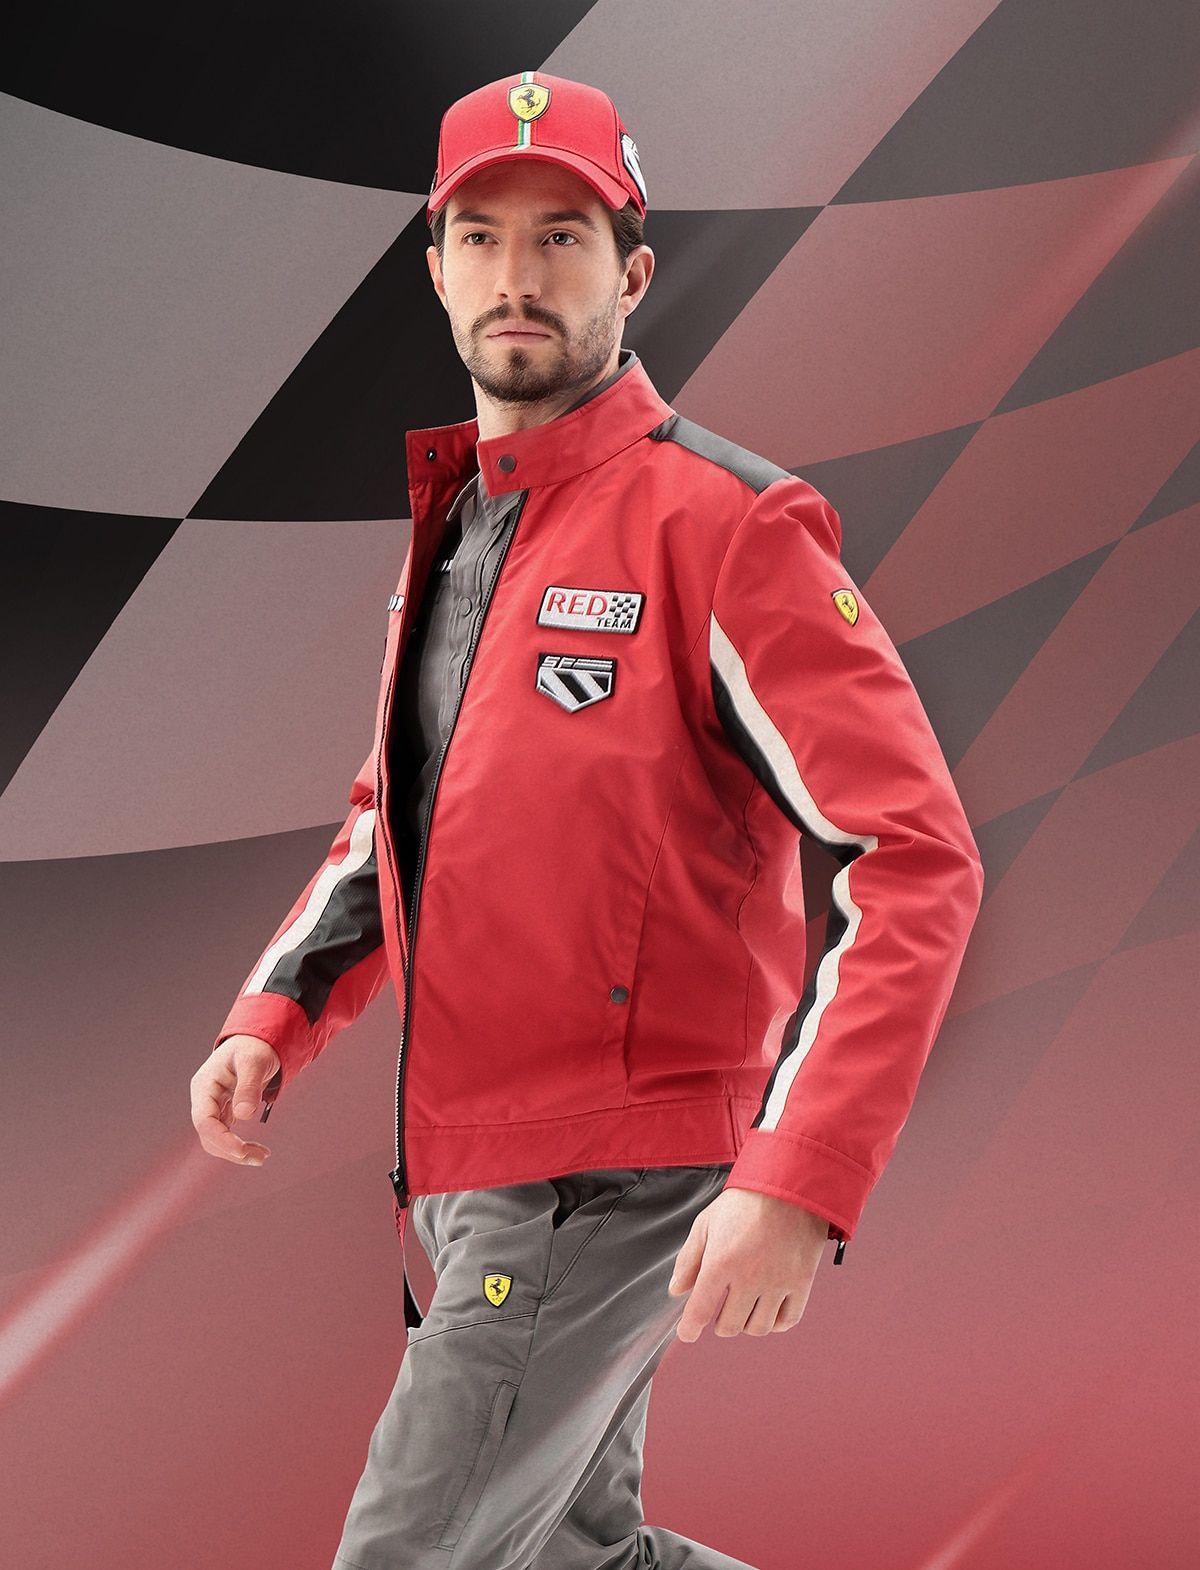 Man in Red Jacket Logo - Ferrari Store and merchandise. Official Ferrari Store